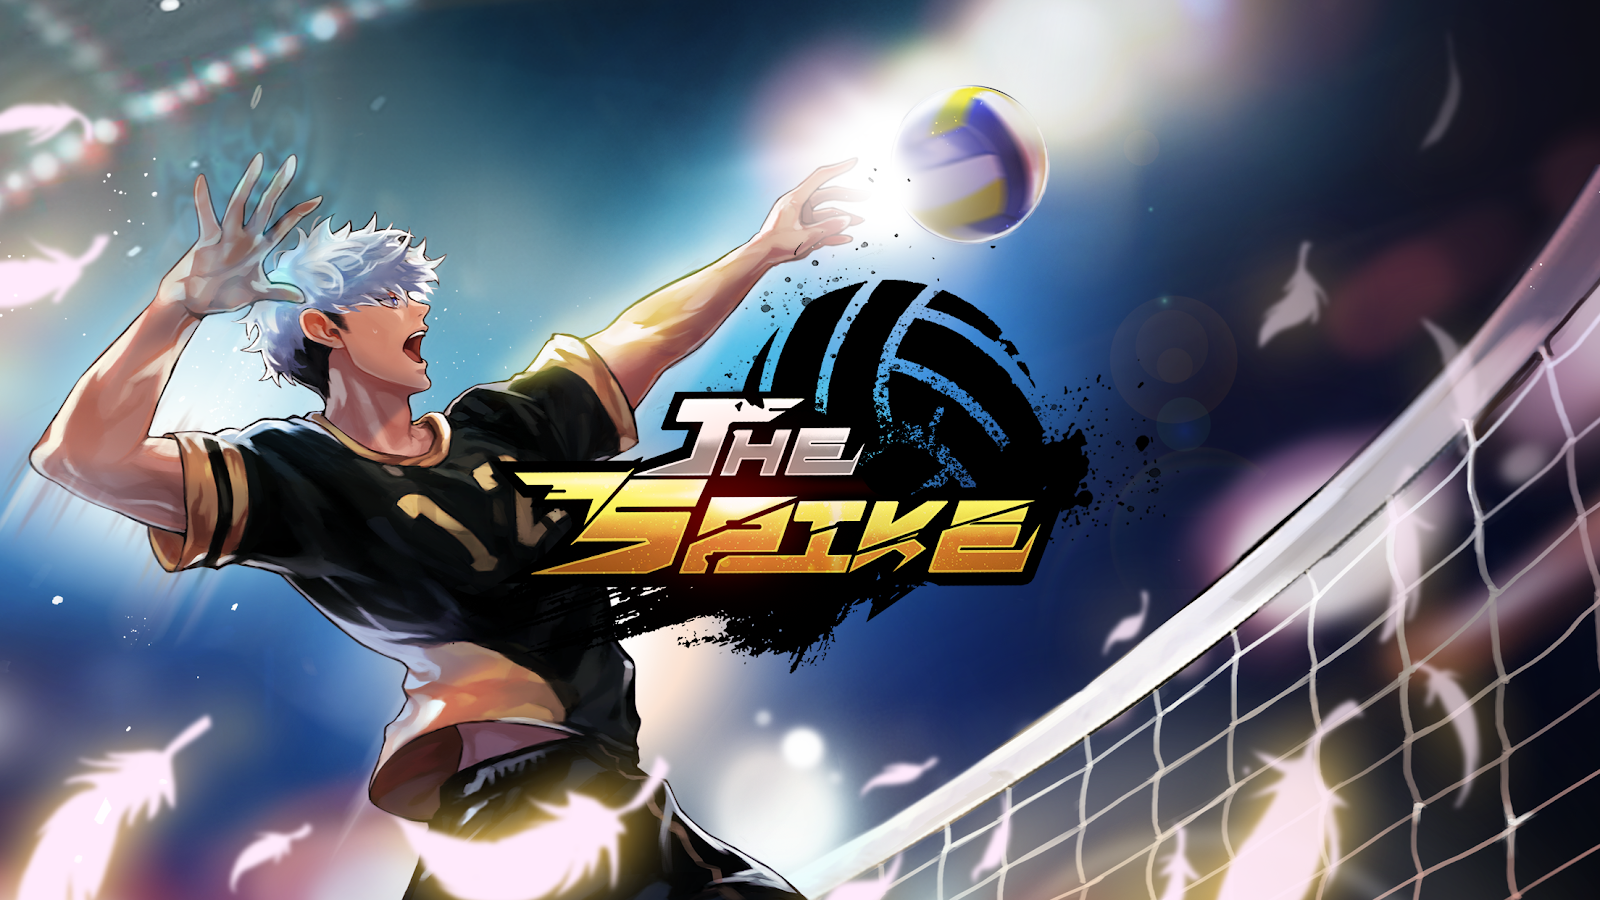 Промокод зе спайк волейбол. Игра the Spike. The Spike Volleyball игра. The Spike Volleyball story. Nishikawa волейбол the Spike.